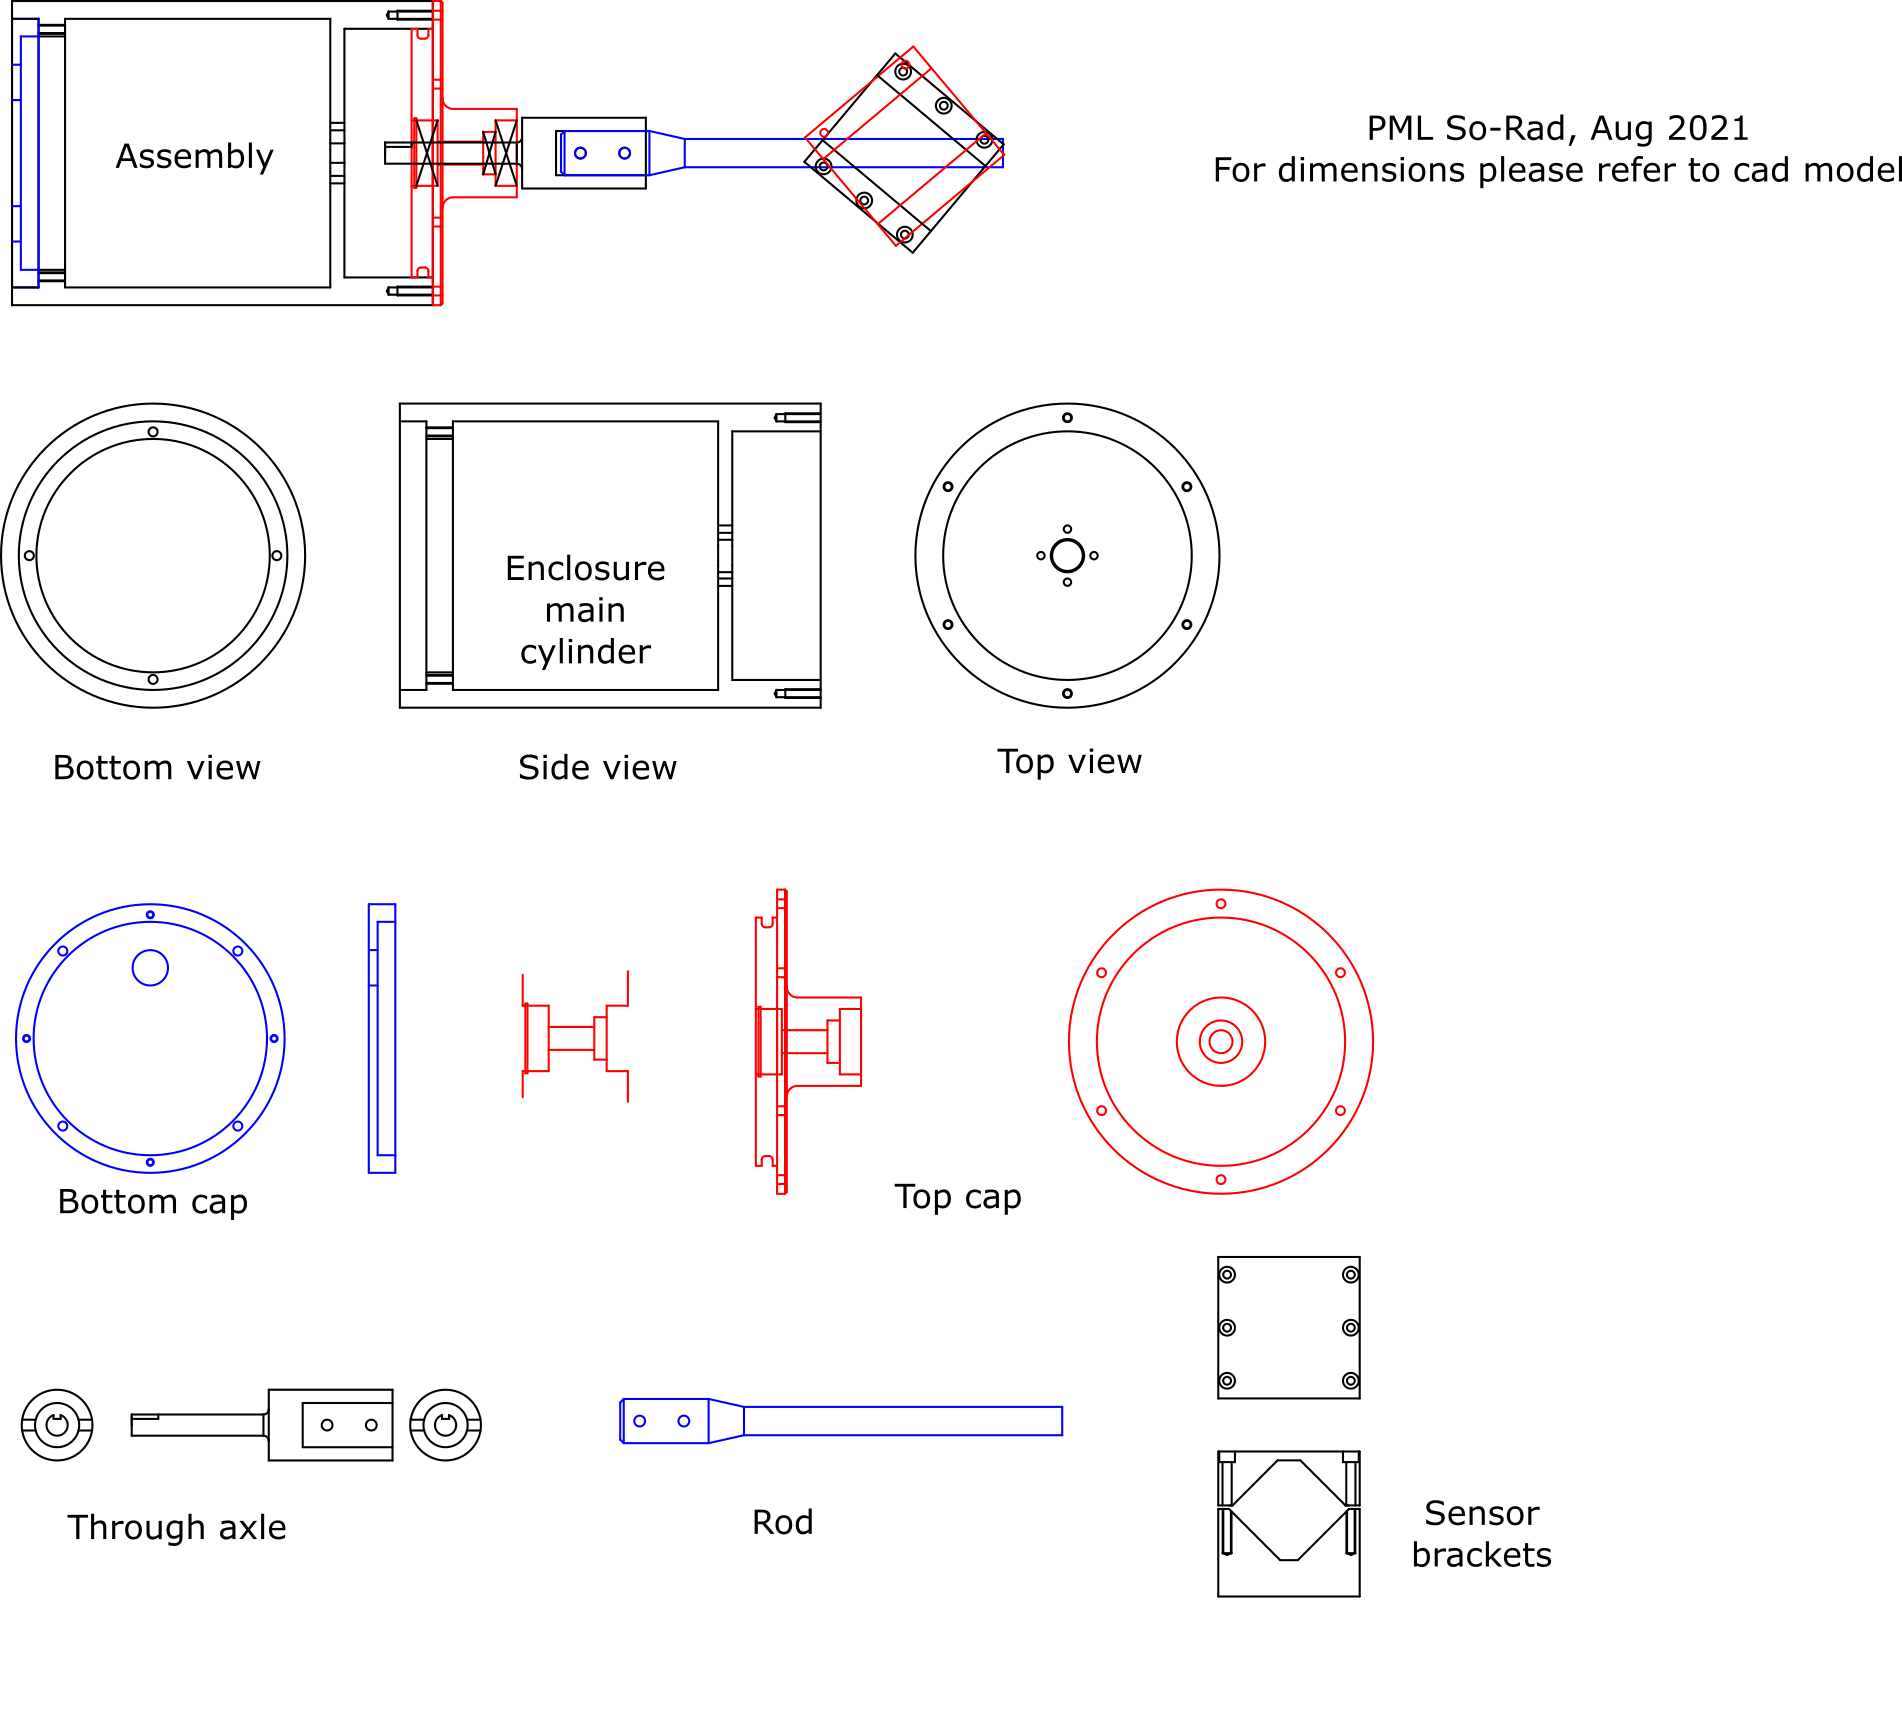 So-Rad component 2D CAD drawings